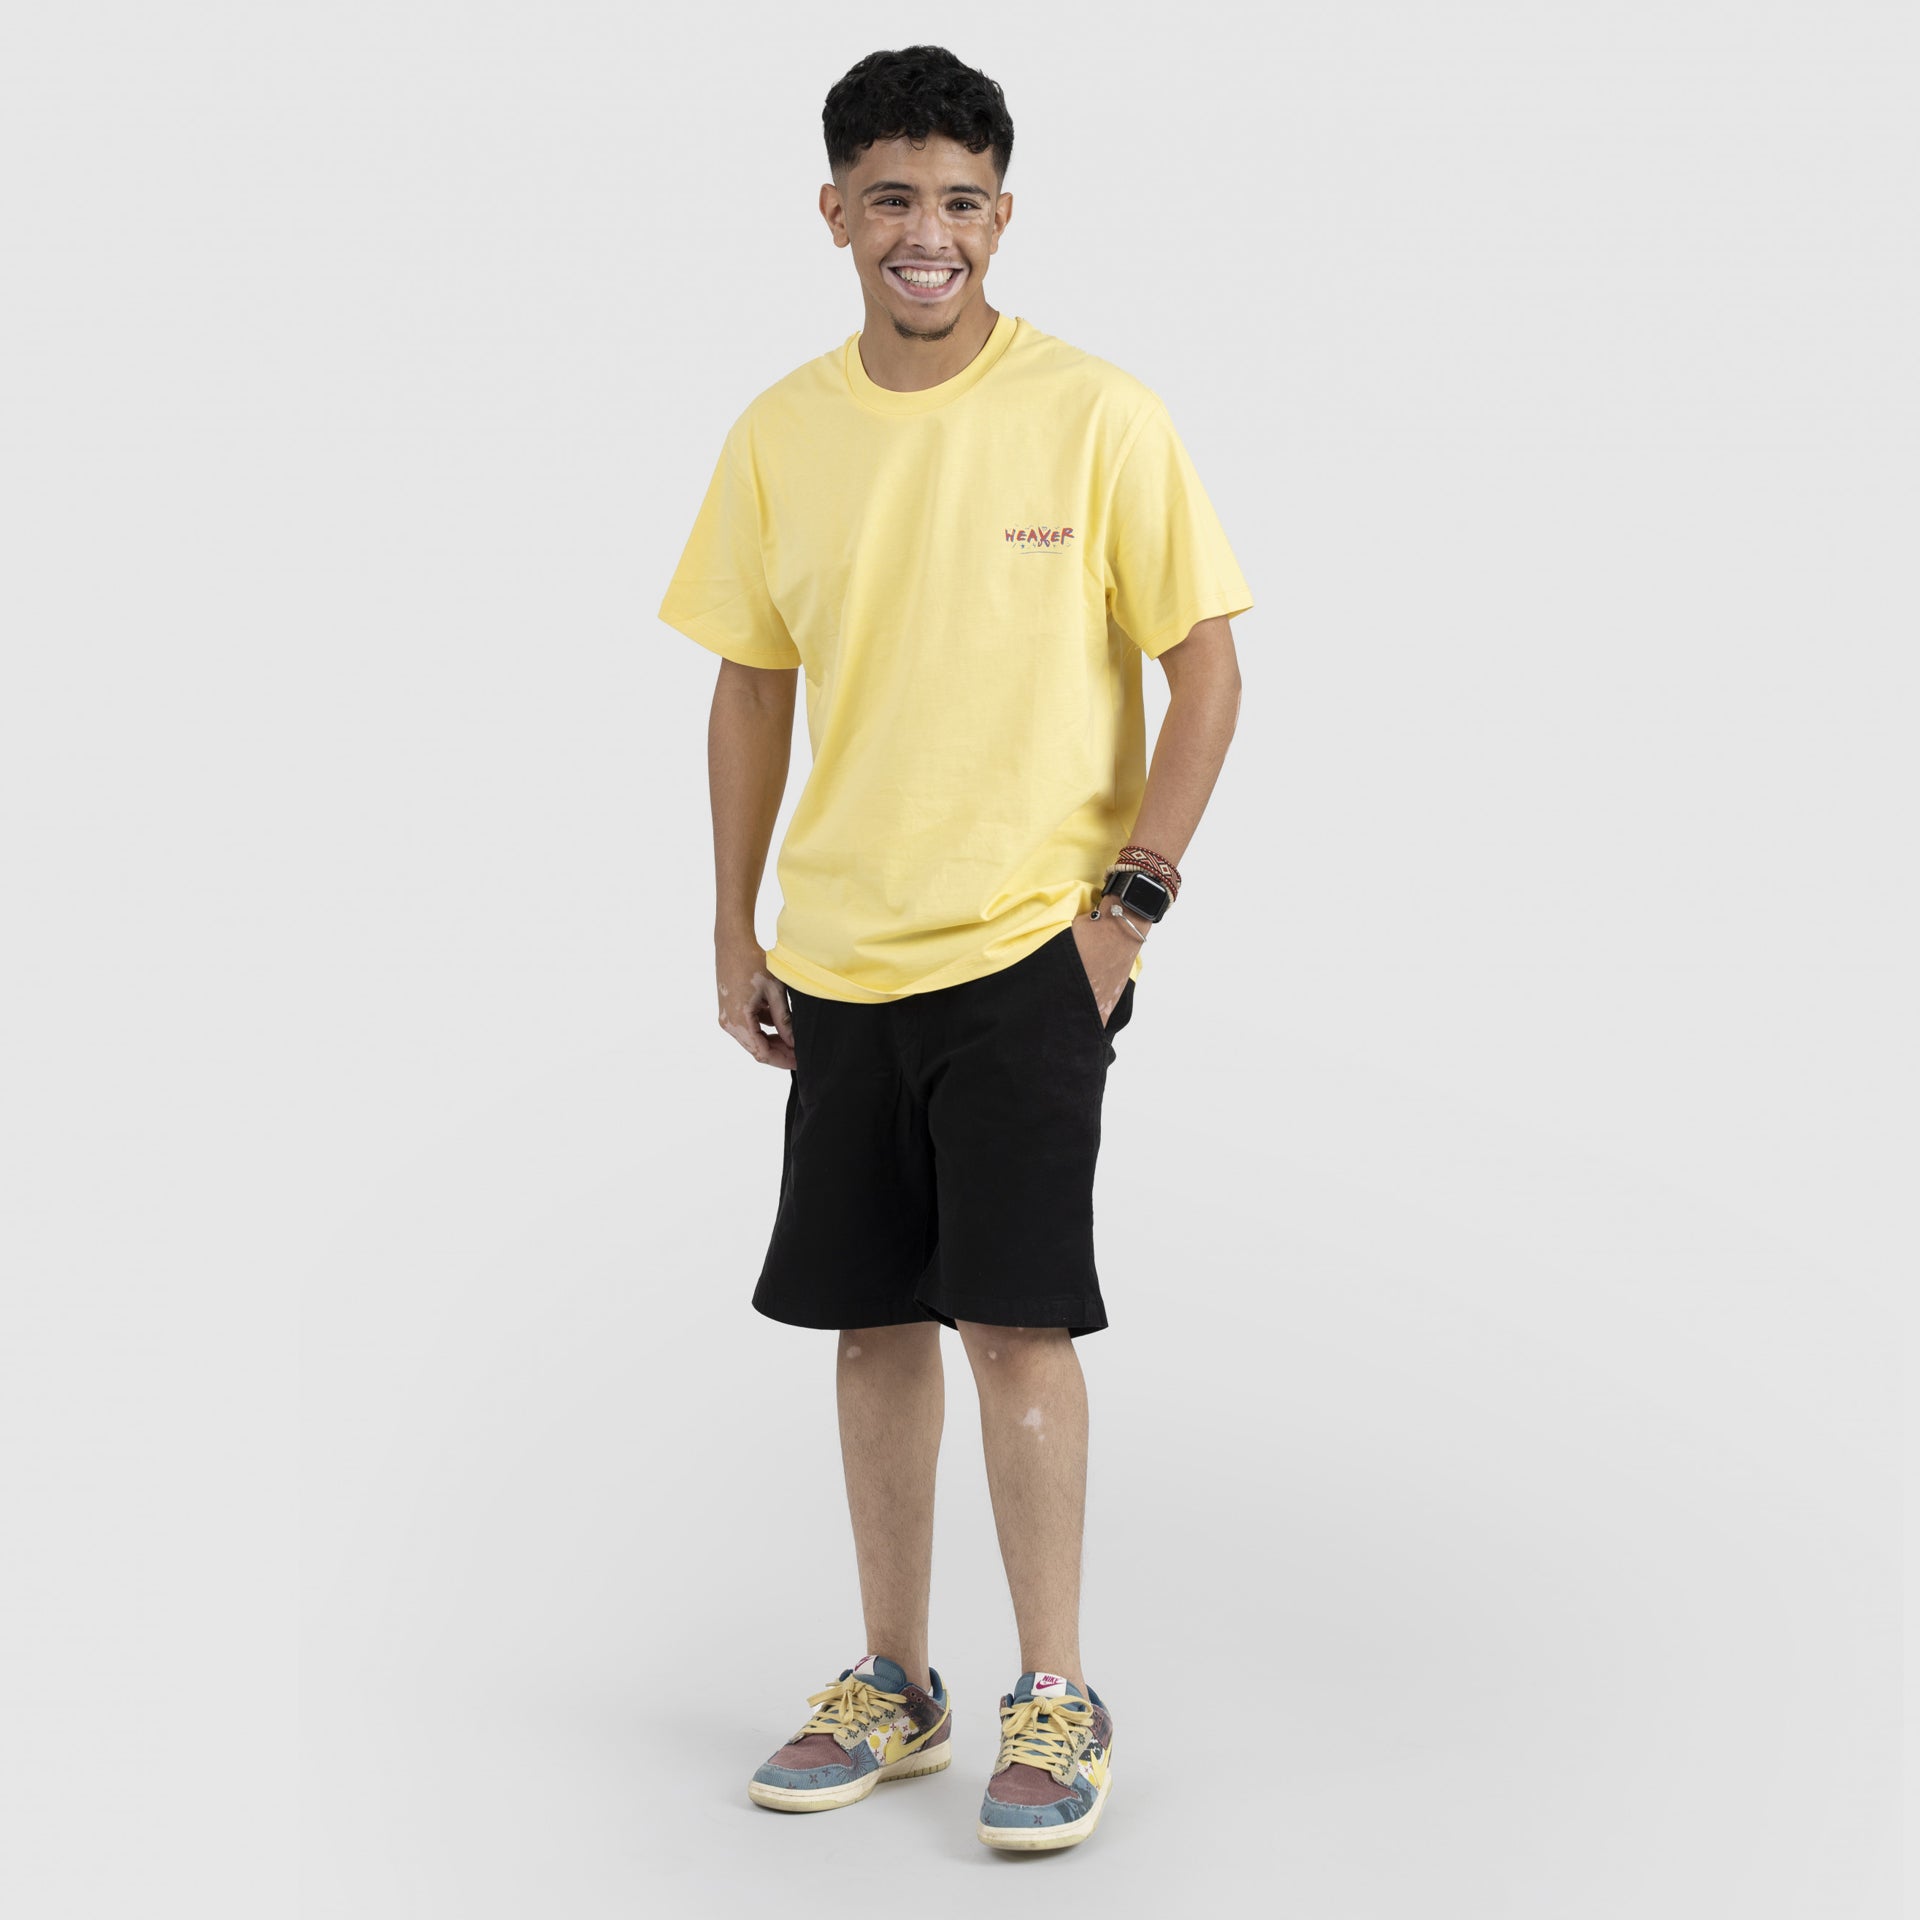 Yellow Classic T-shirt From Weaver Design